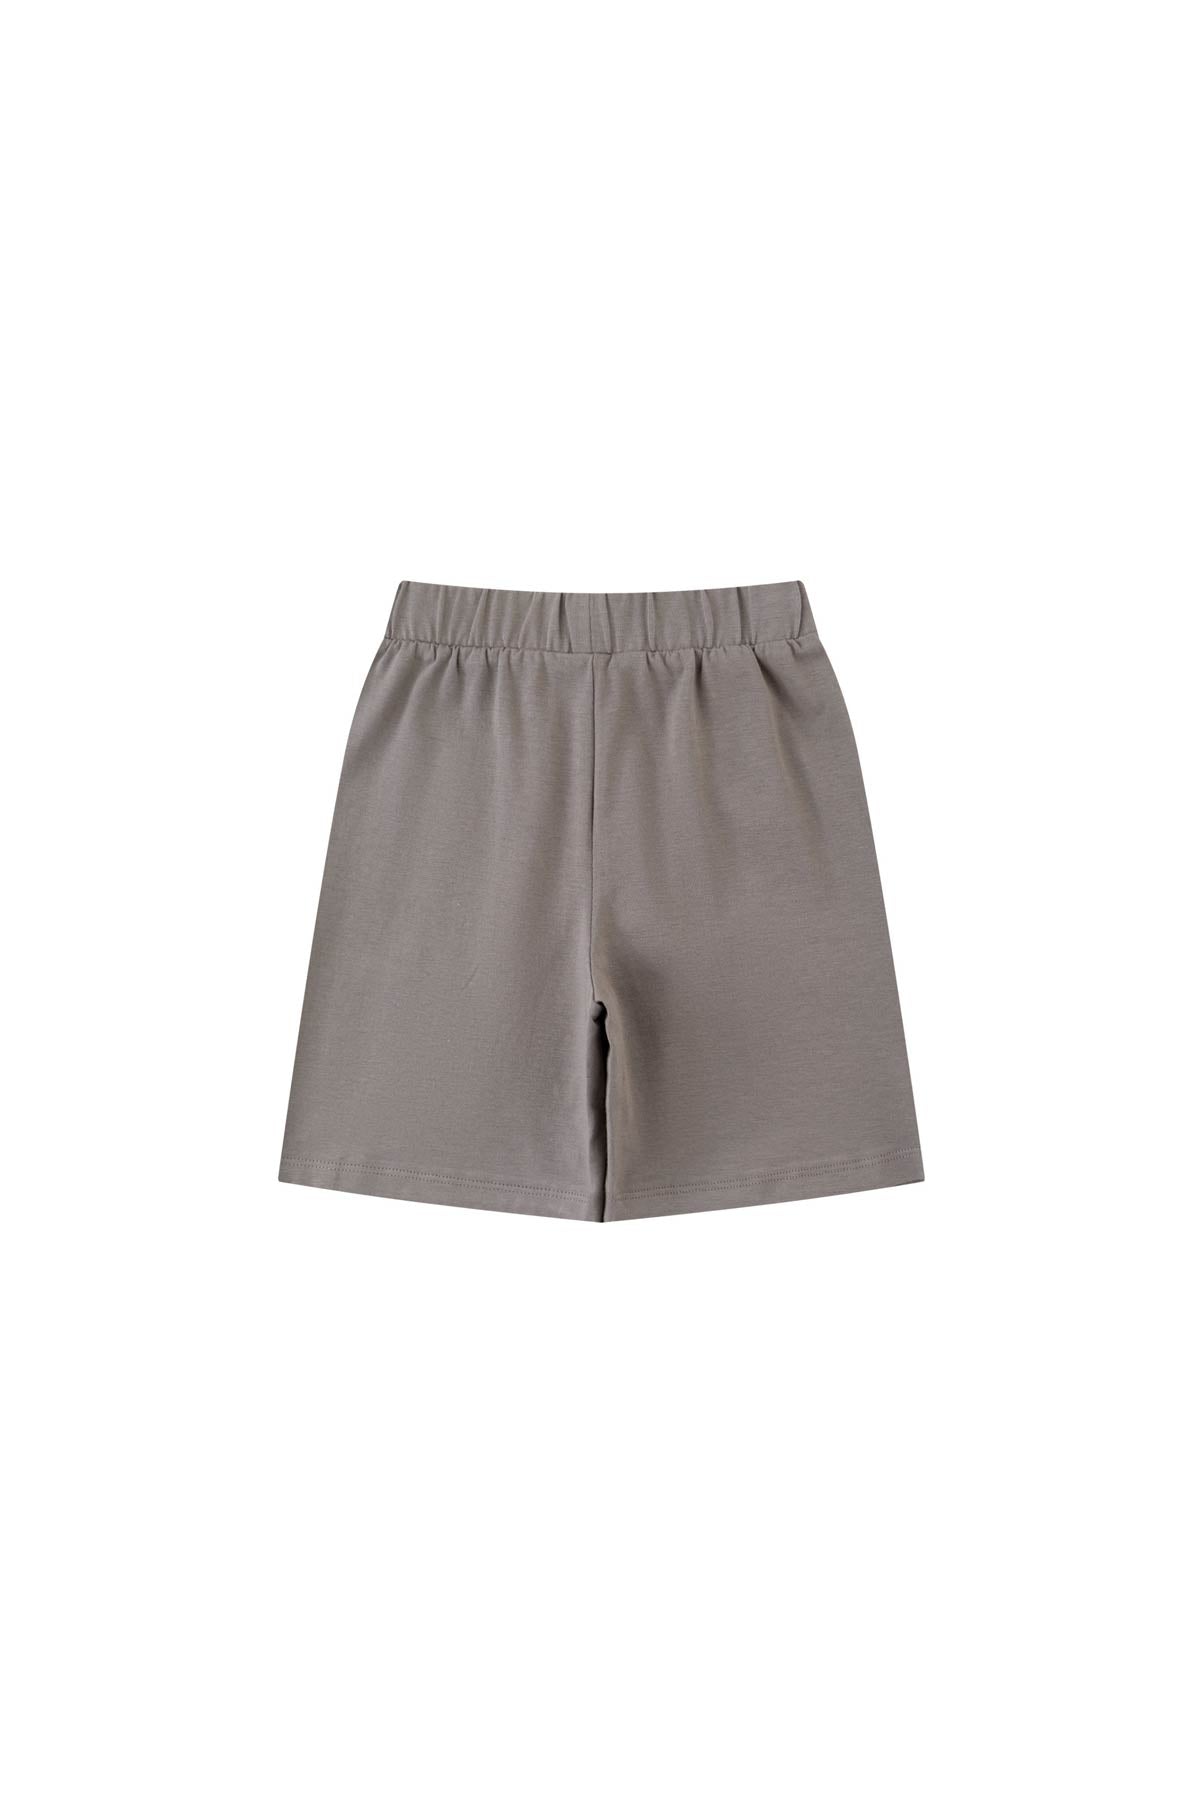 Organic Cotton Toddler Essential Shorts-Elephant Grey